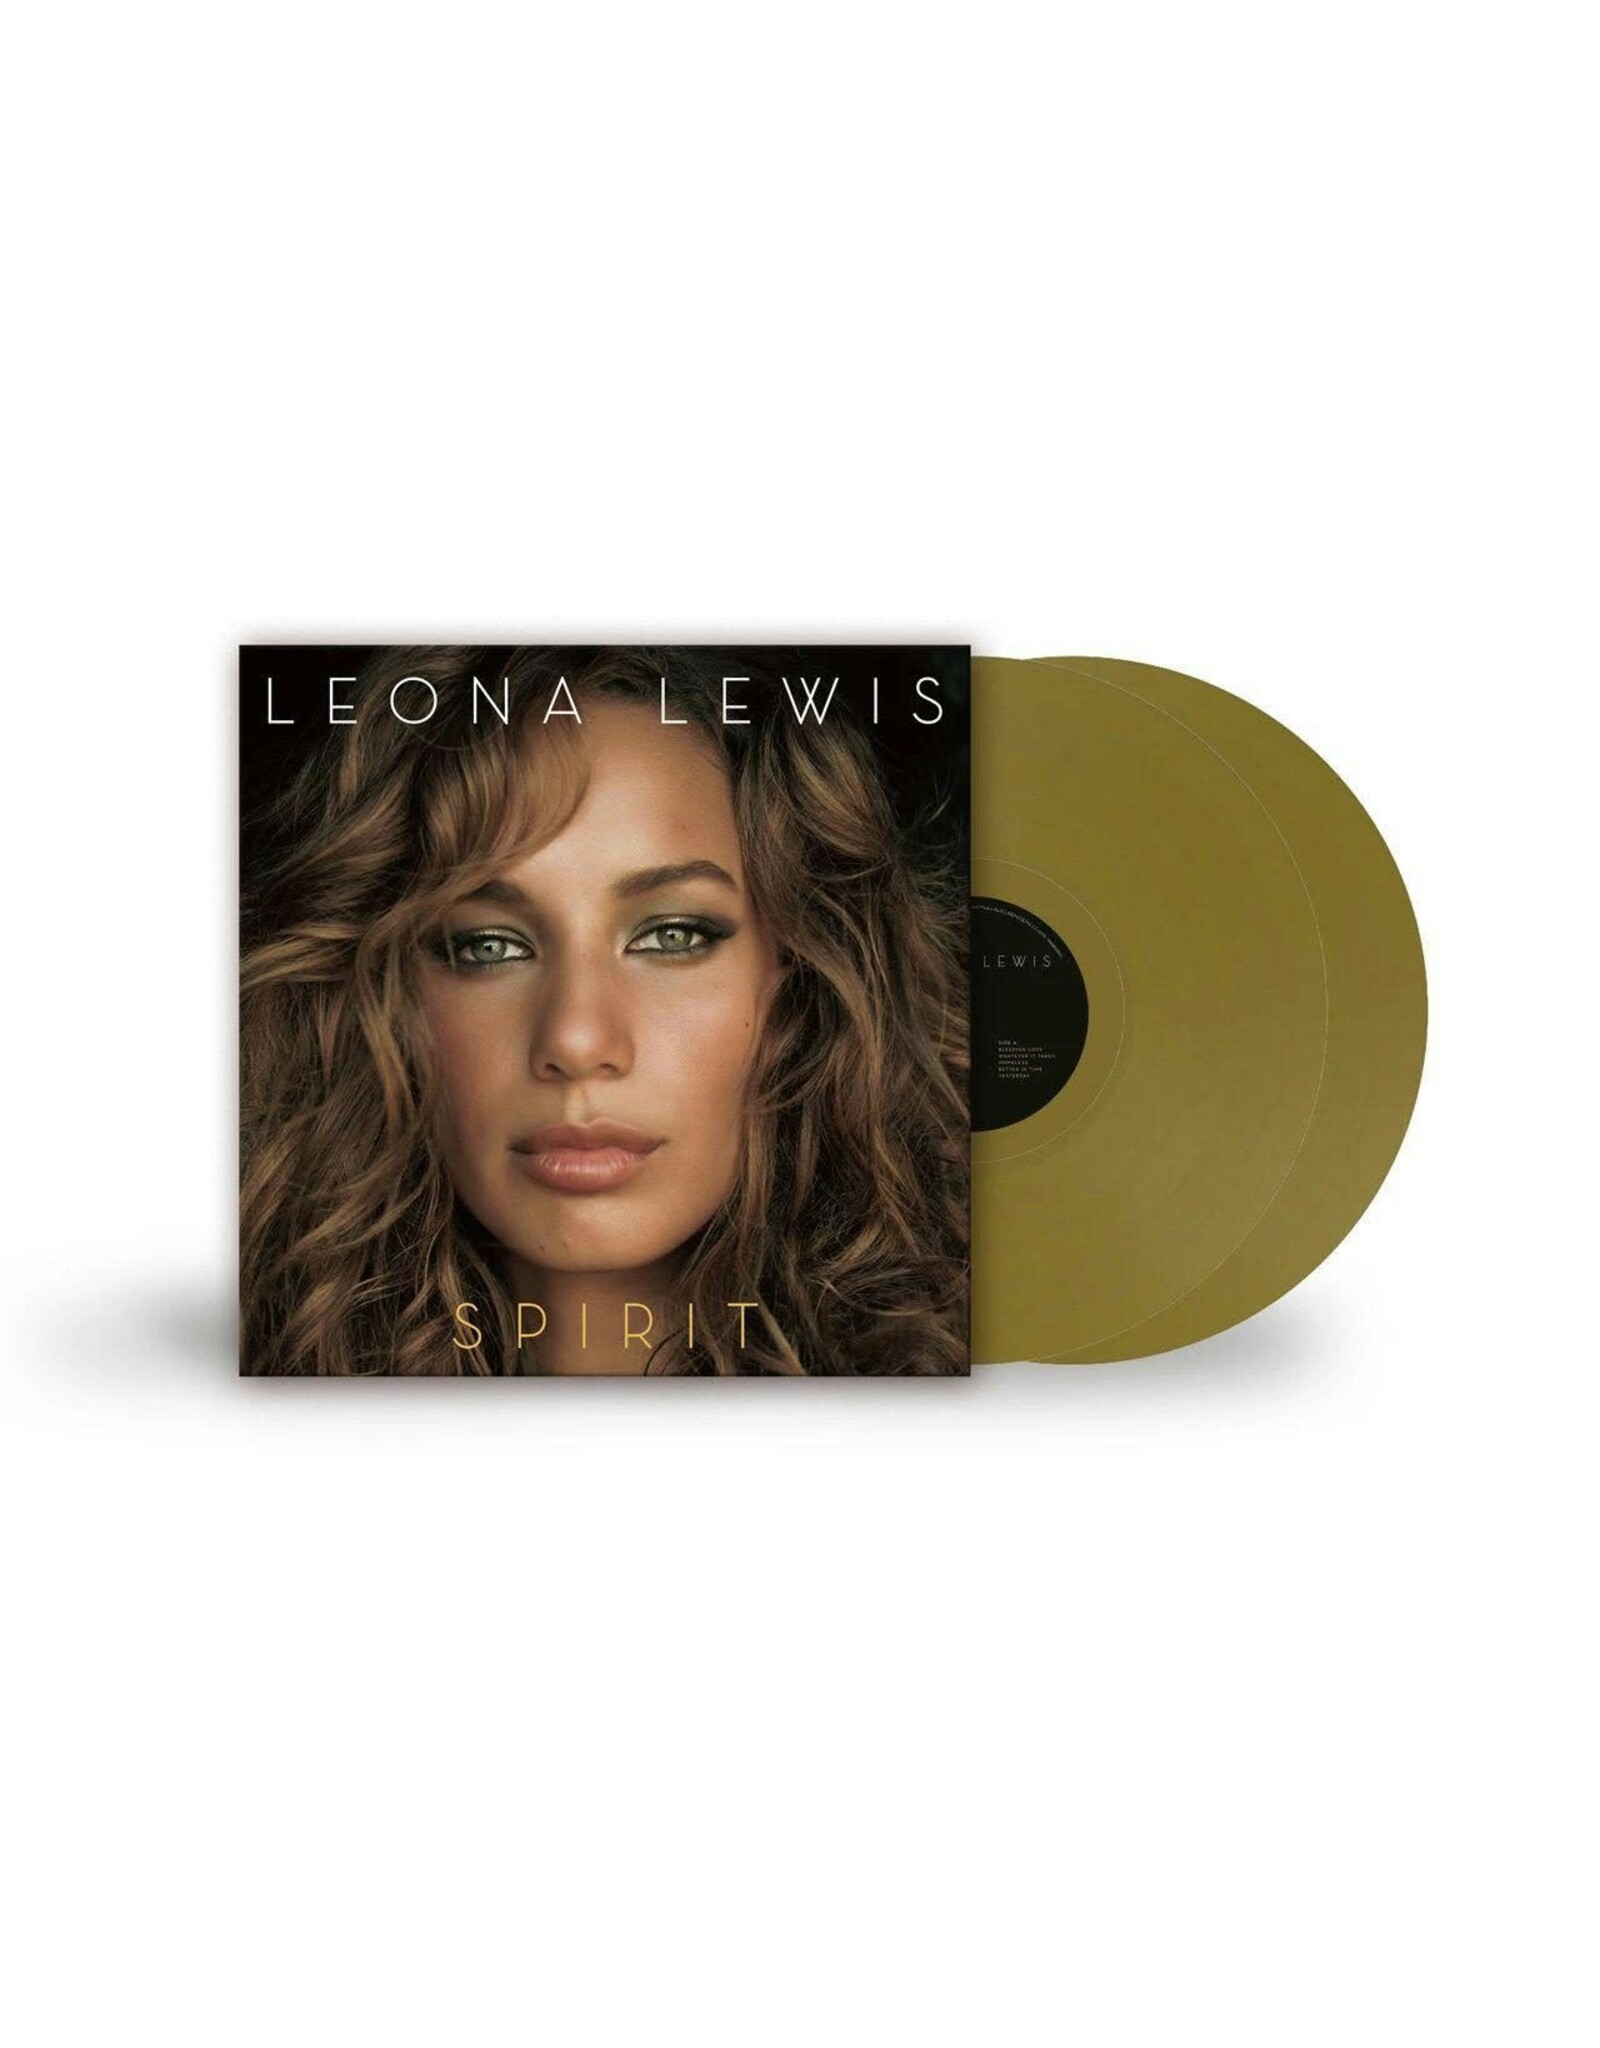 Leona Lewis - Spirit (Gold Vinyl)